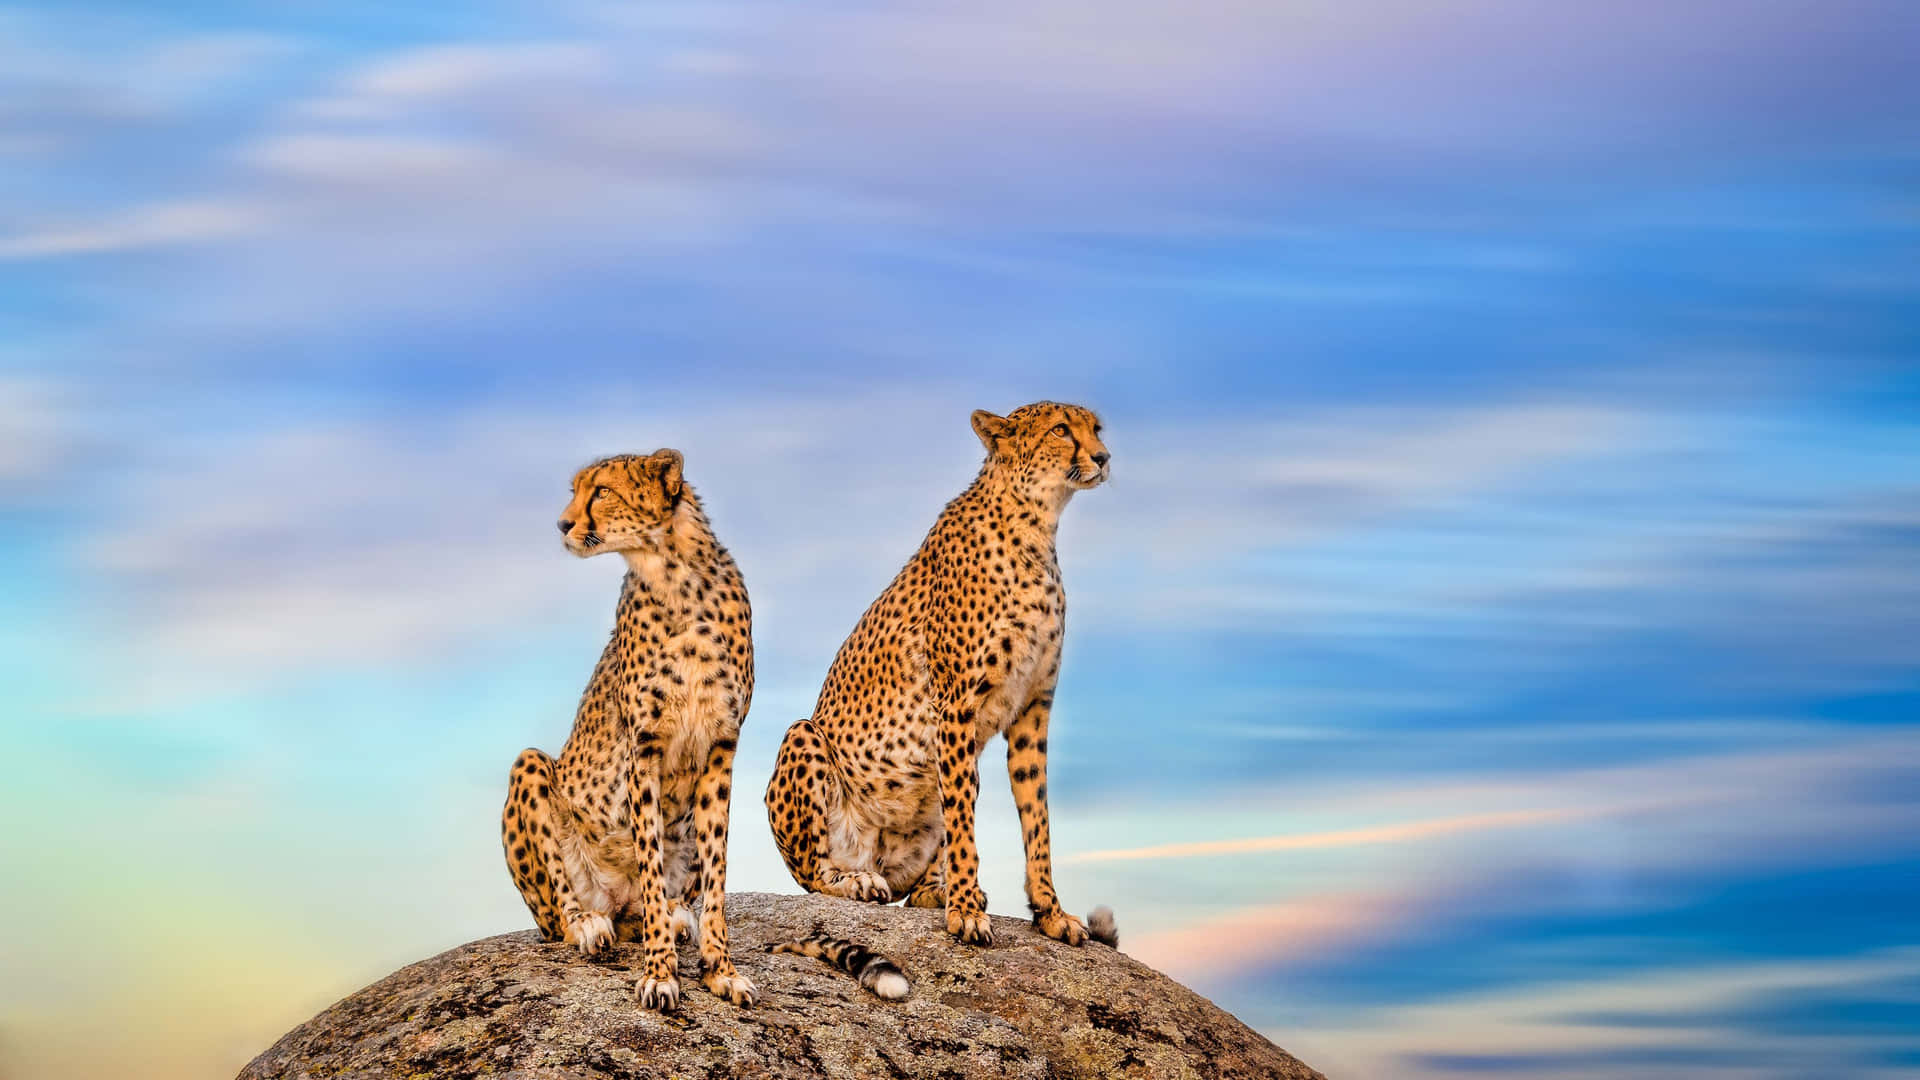 Wildlife of the Serengeti, Cheetah shows off its amazing speed